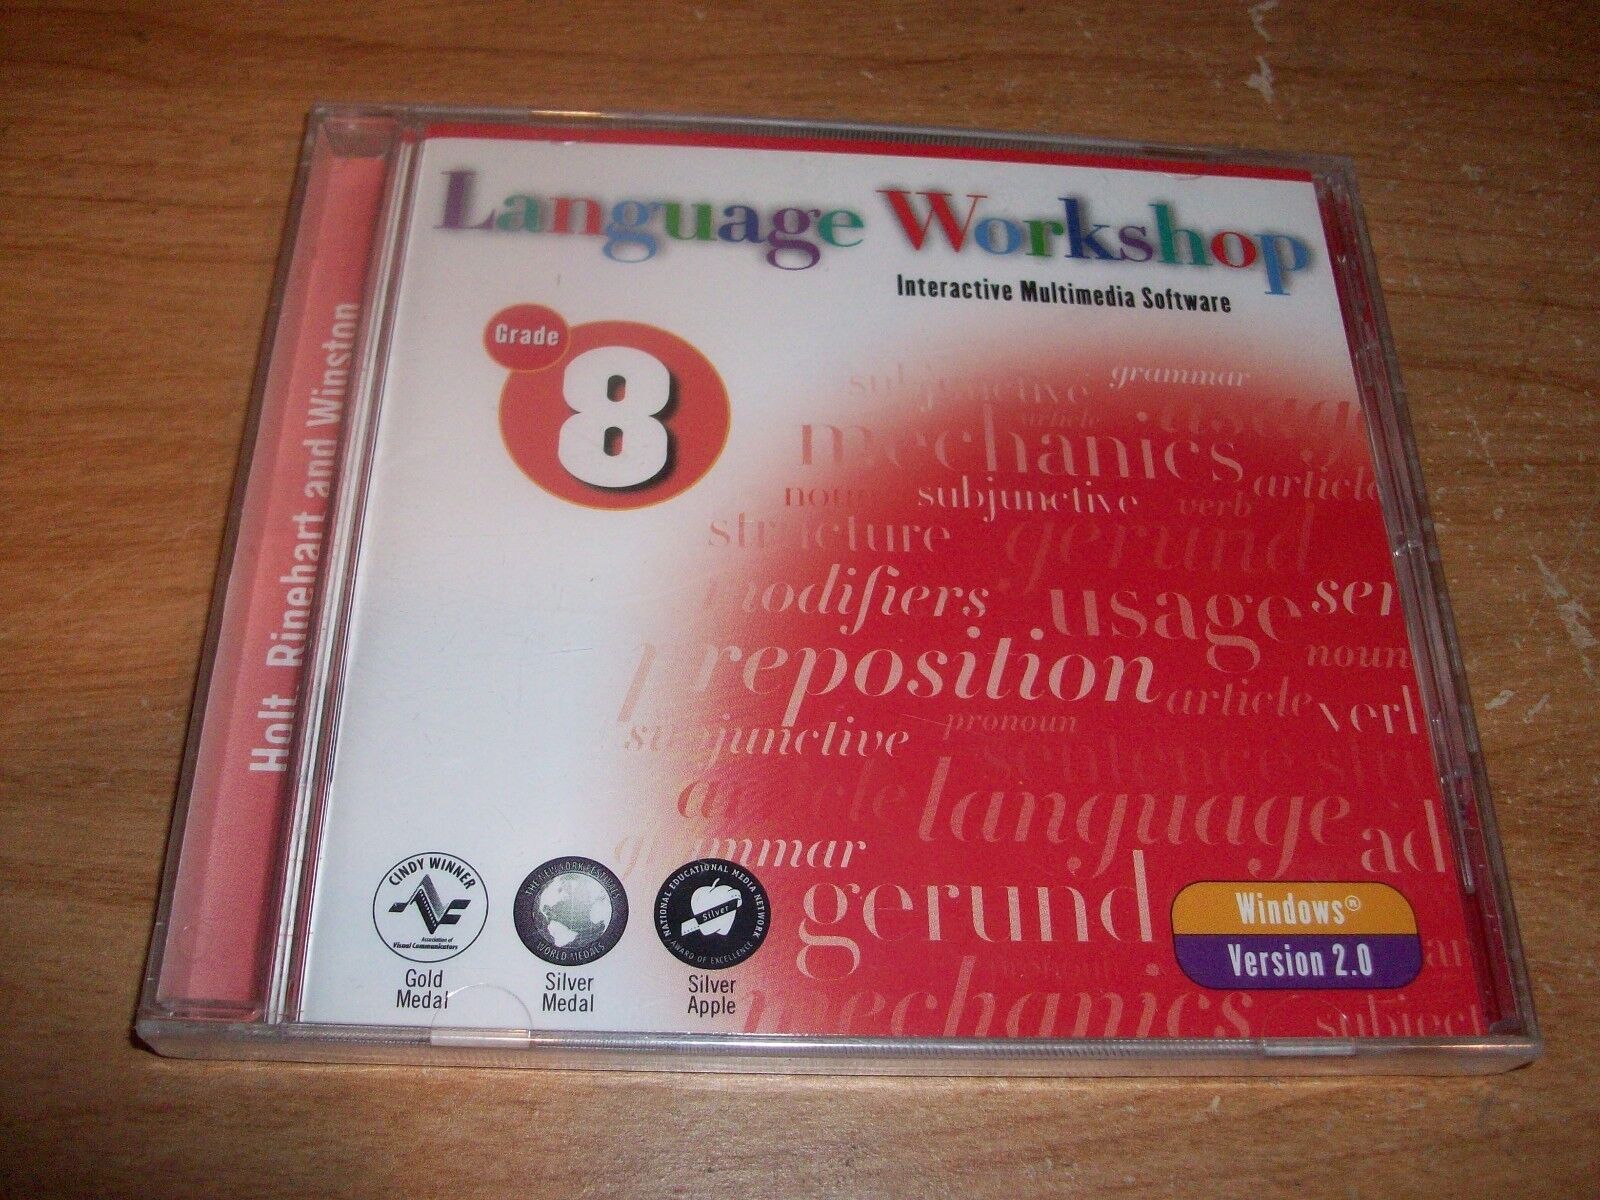 Language Workshop Grade 8 Interactive Multimedia CD ROM Version 2.0 WIN 95 NEW